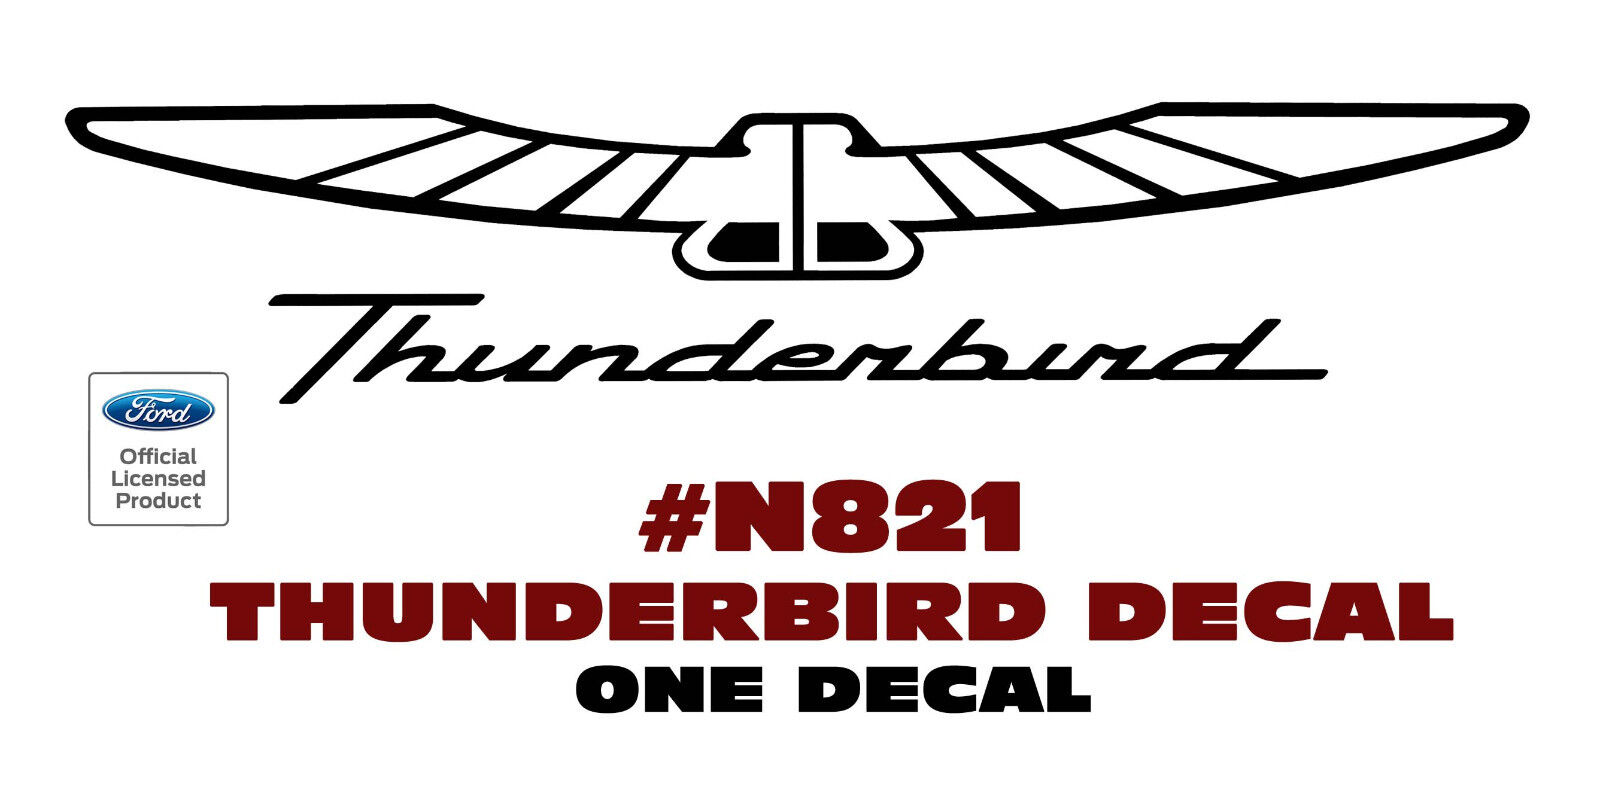 N821 FORD THUNDERBIRD with BIRD DECAL - 14